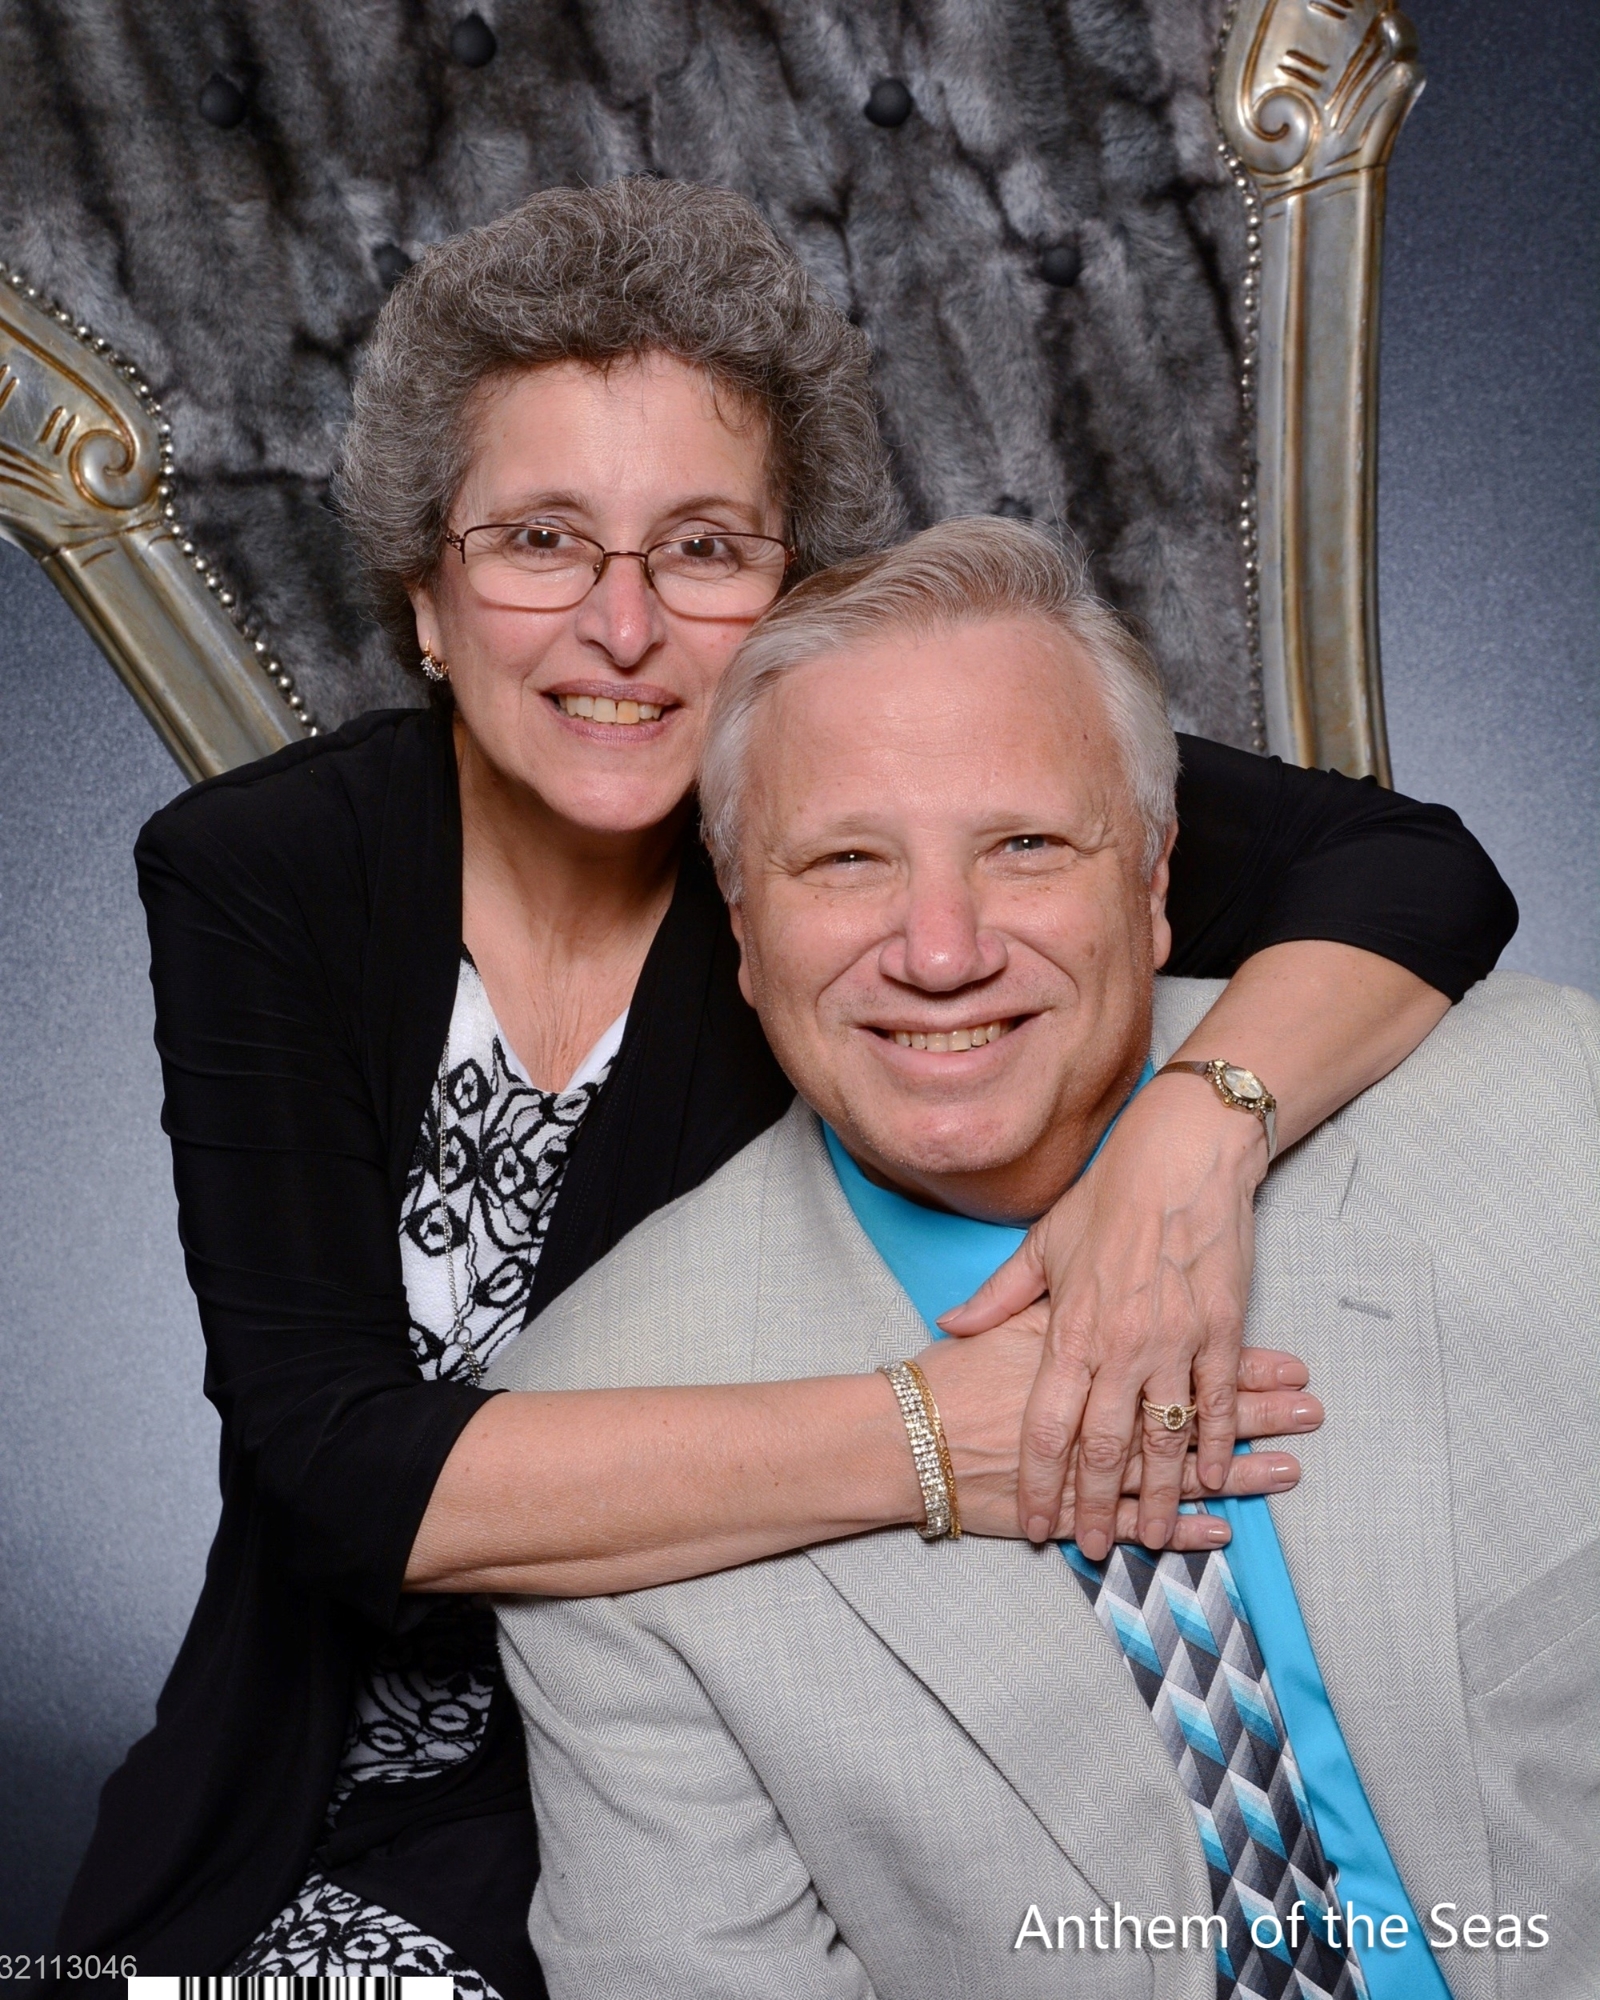 Rich and Johnna DeCeglie will celebrate their 35th wedding anniversary on Nov. 5 Courtesy photo